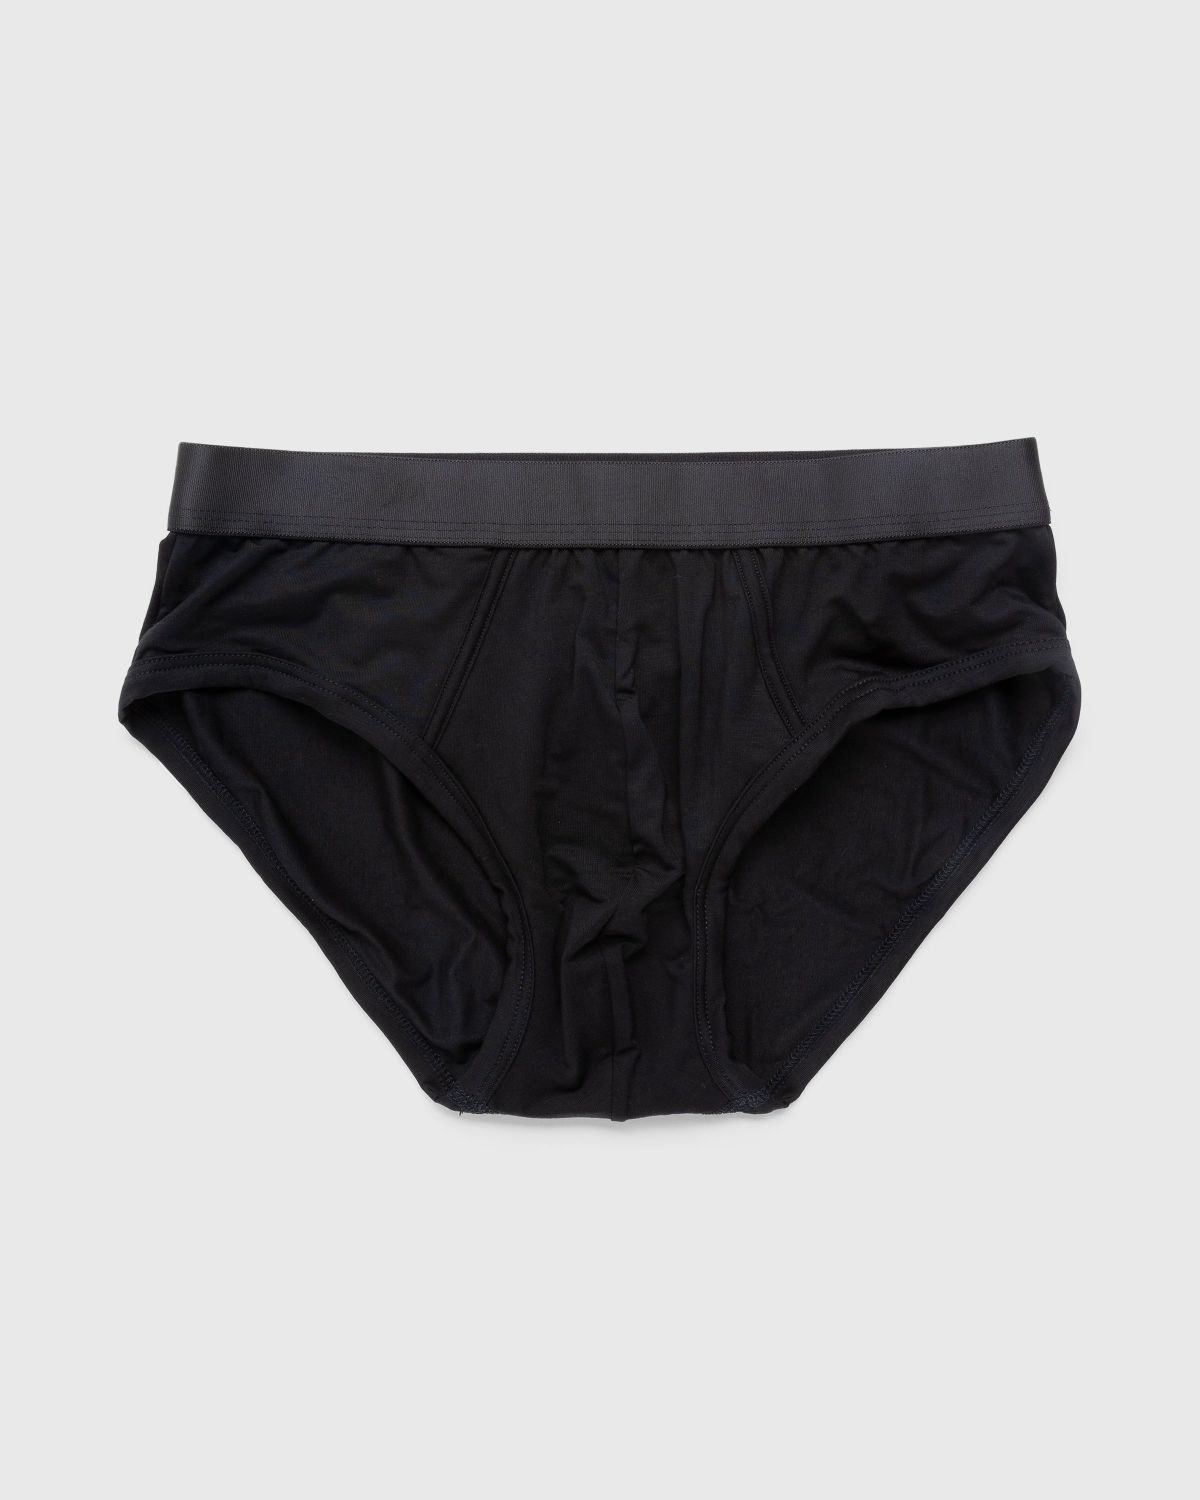 CDLP – Y-Brief Black - Underwear & Loungewear - Black - Image 1